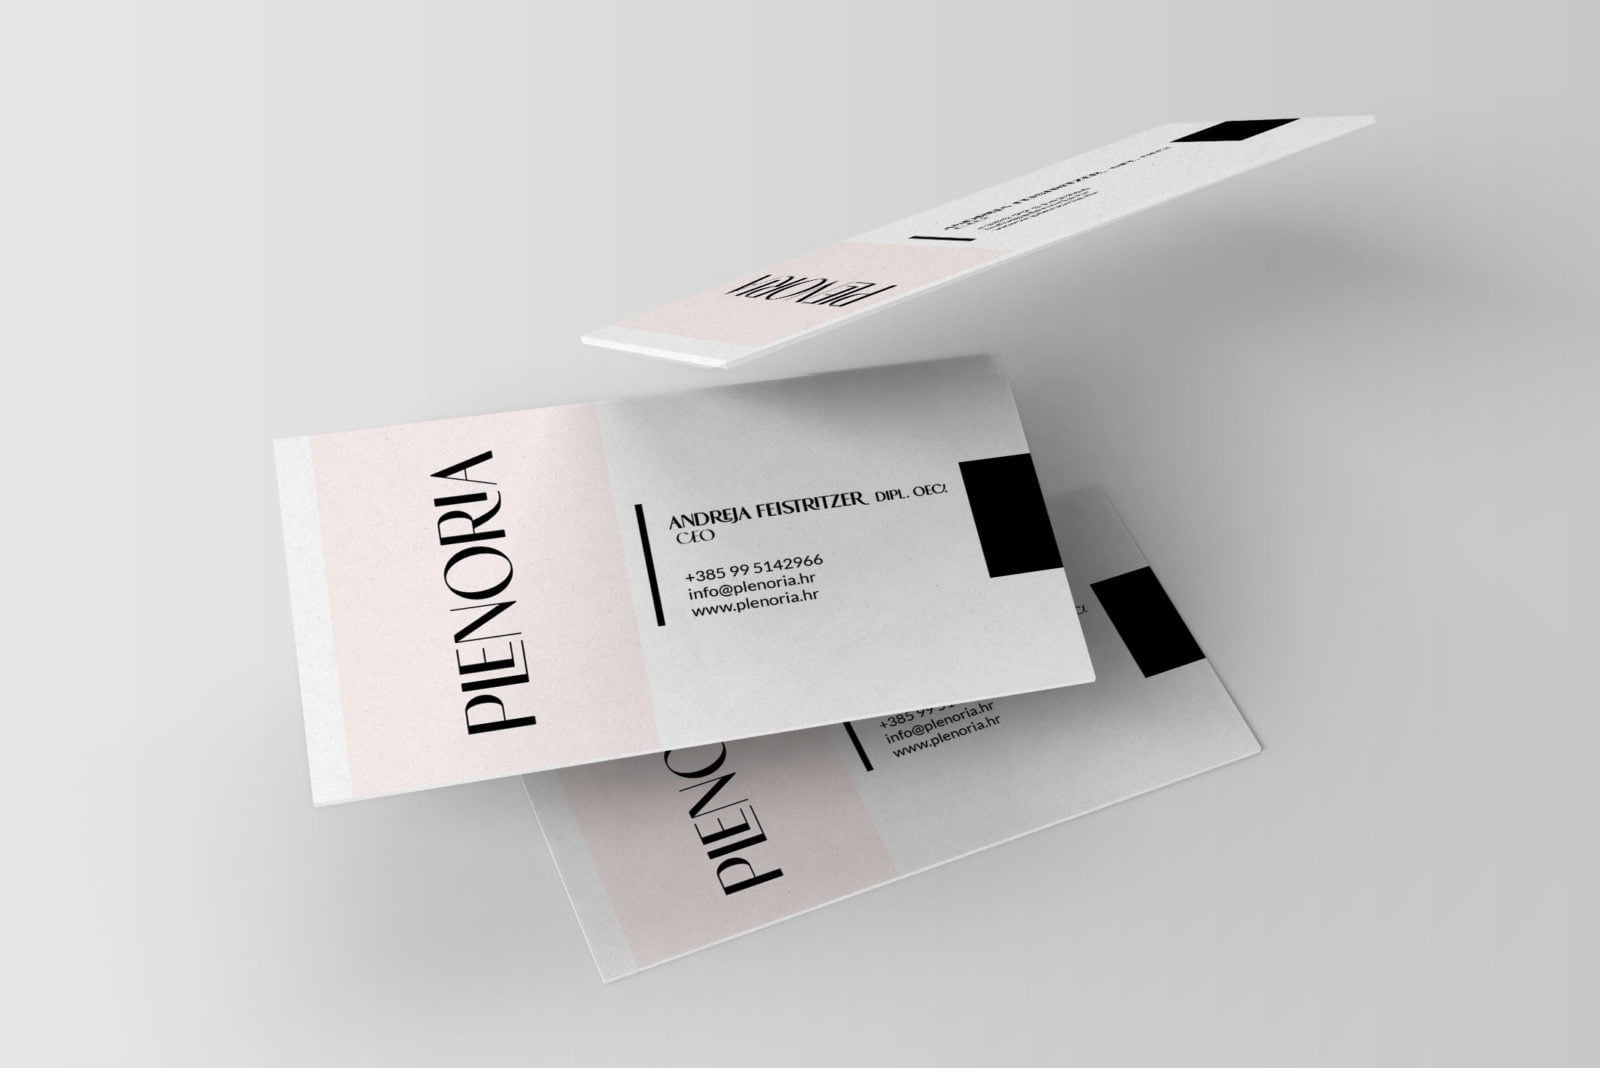 dizajn posjetnica plenoria designer2 dizajn ambalaze packaging design 1